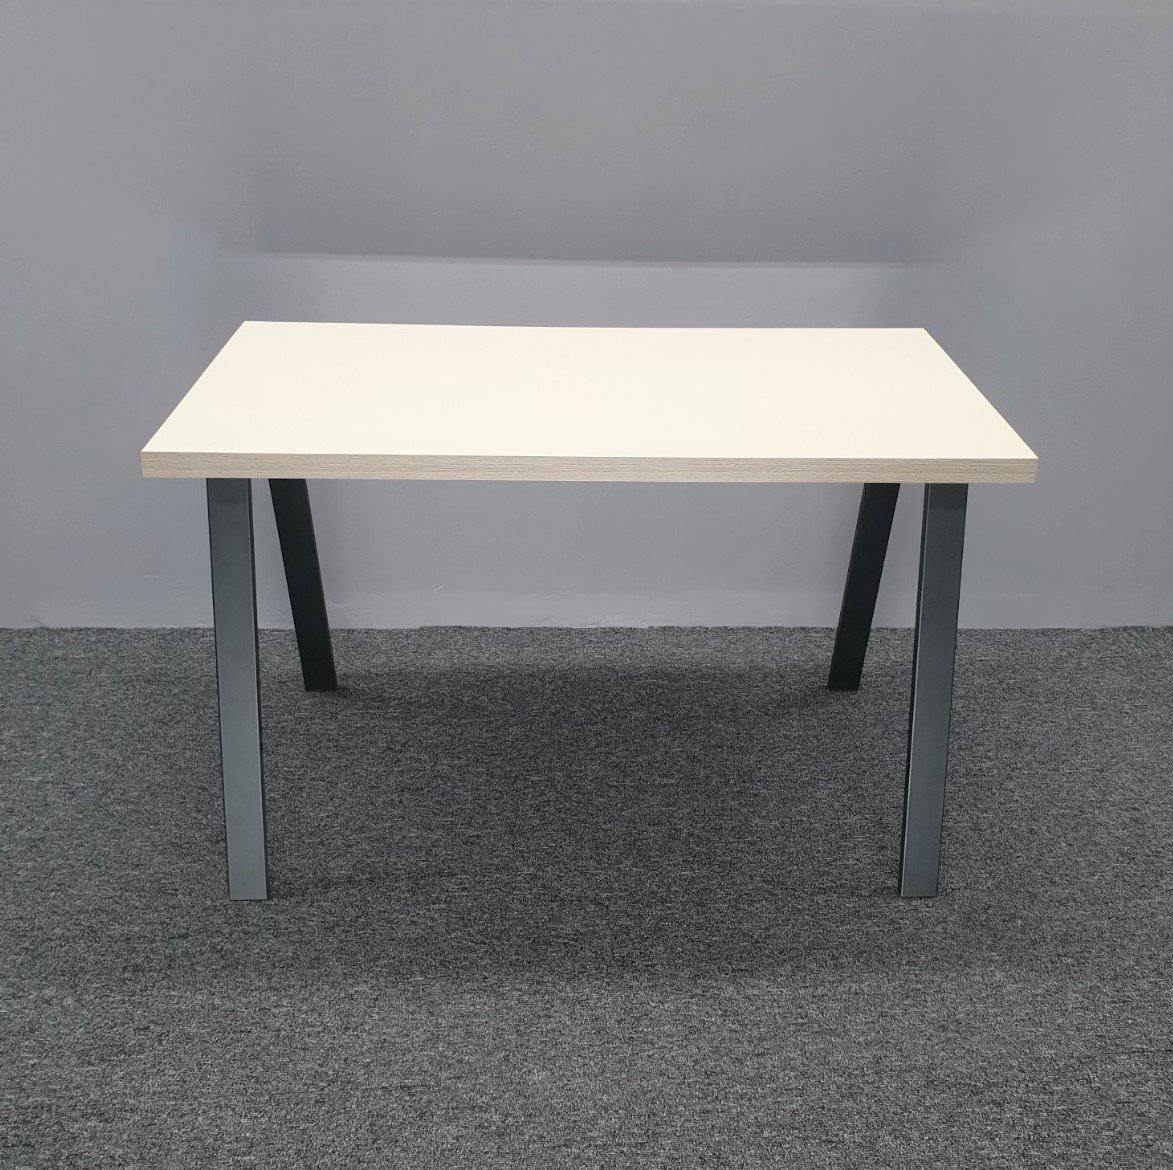 LOGAN Table / Study Desk